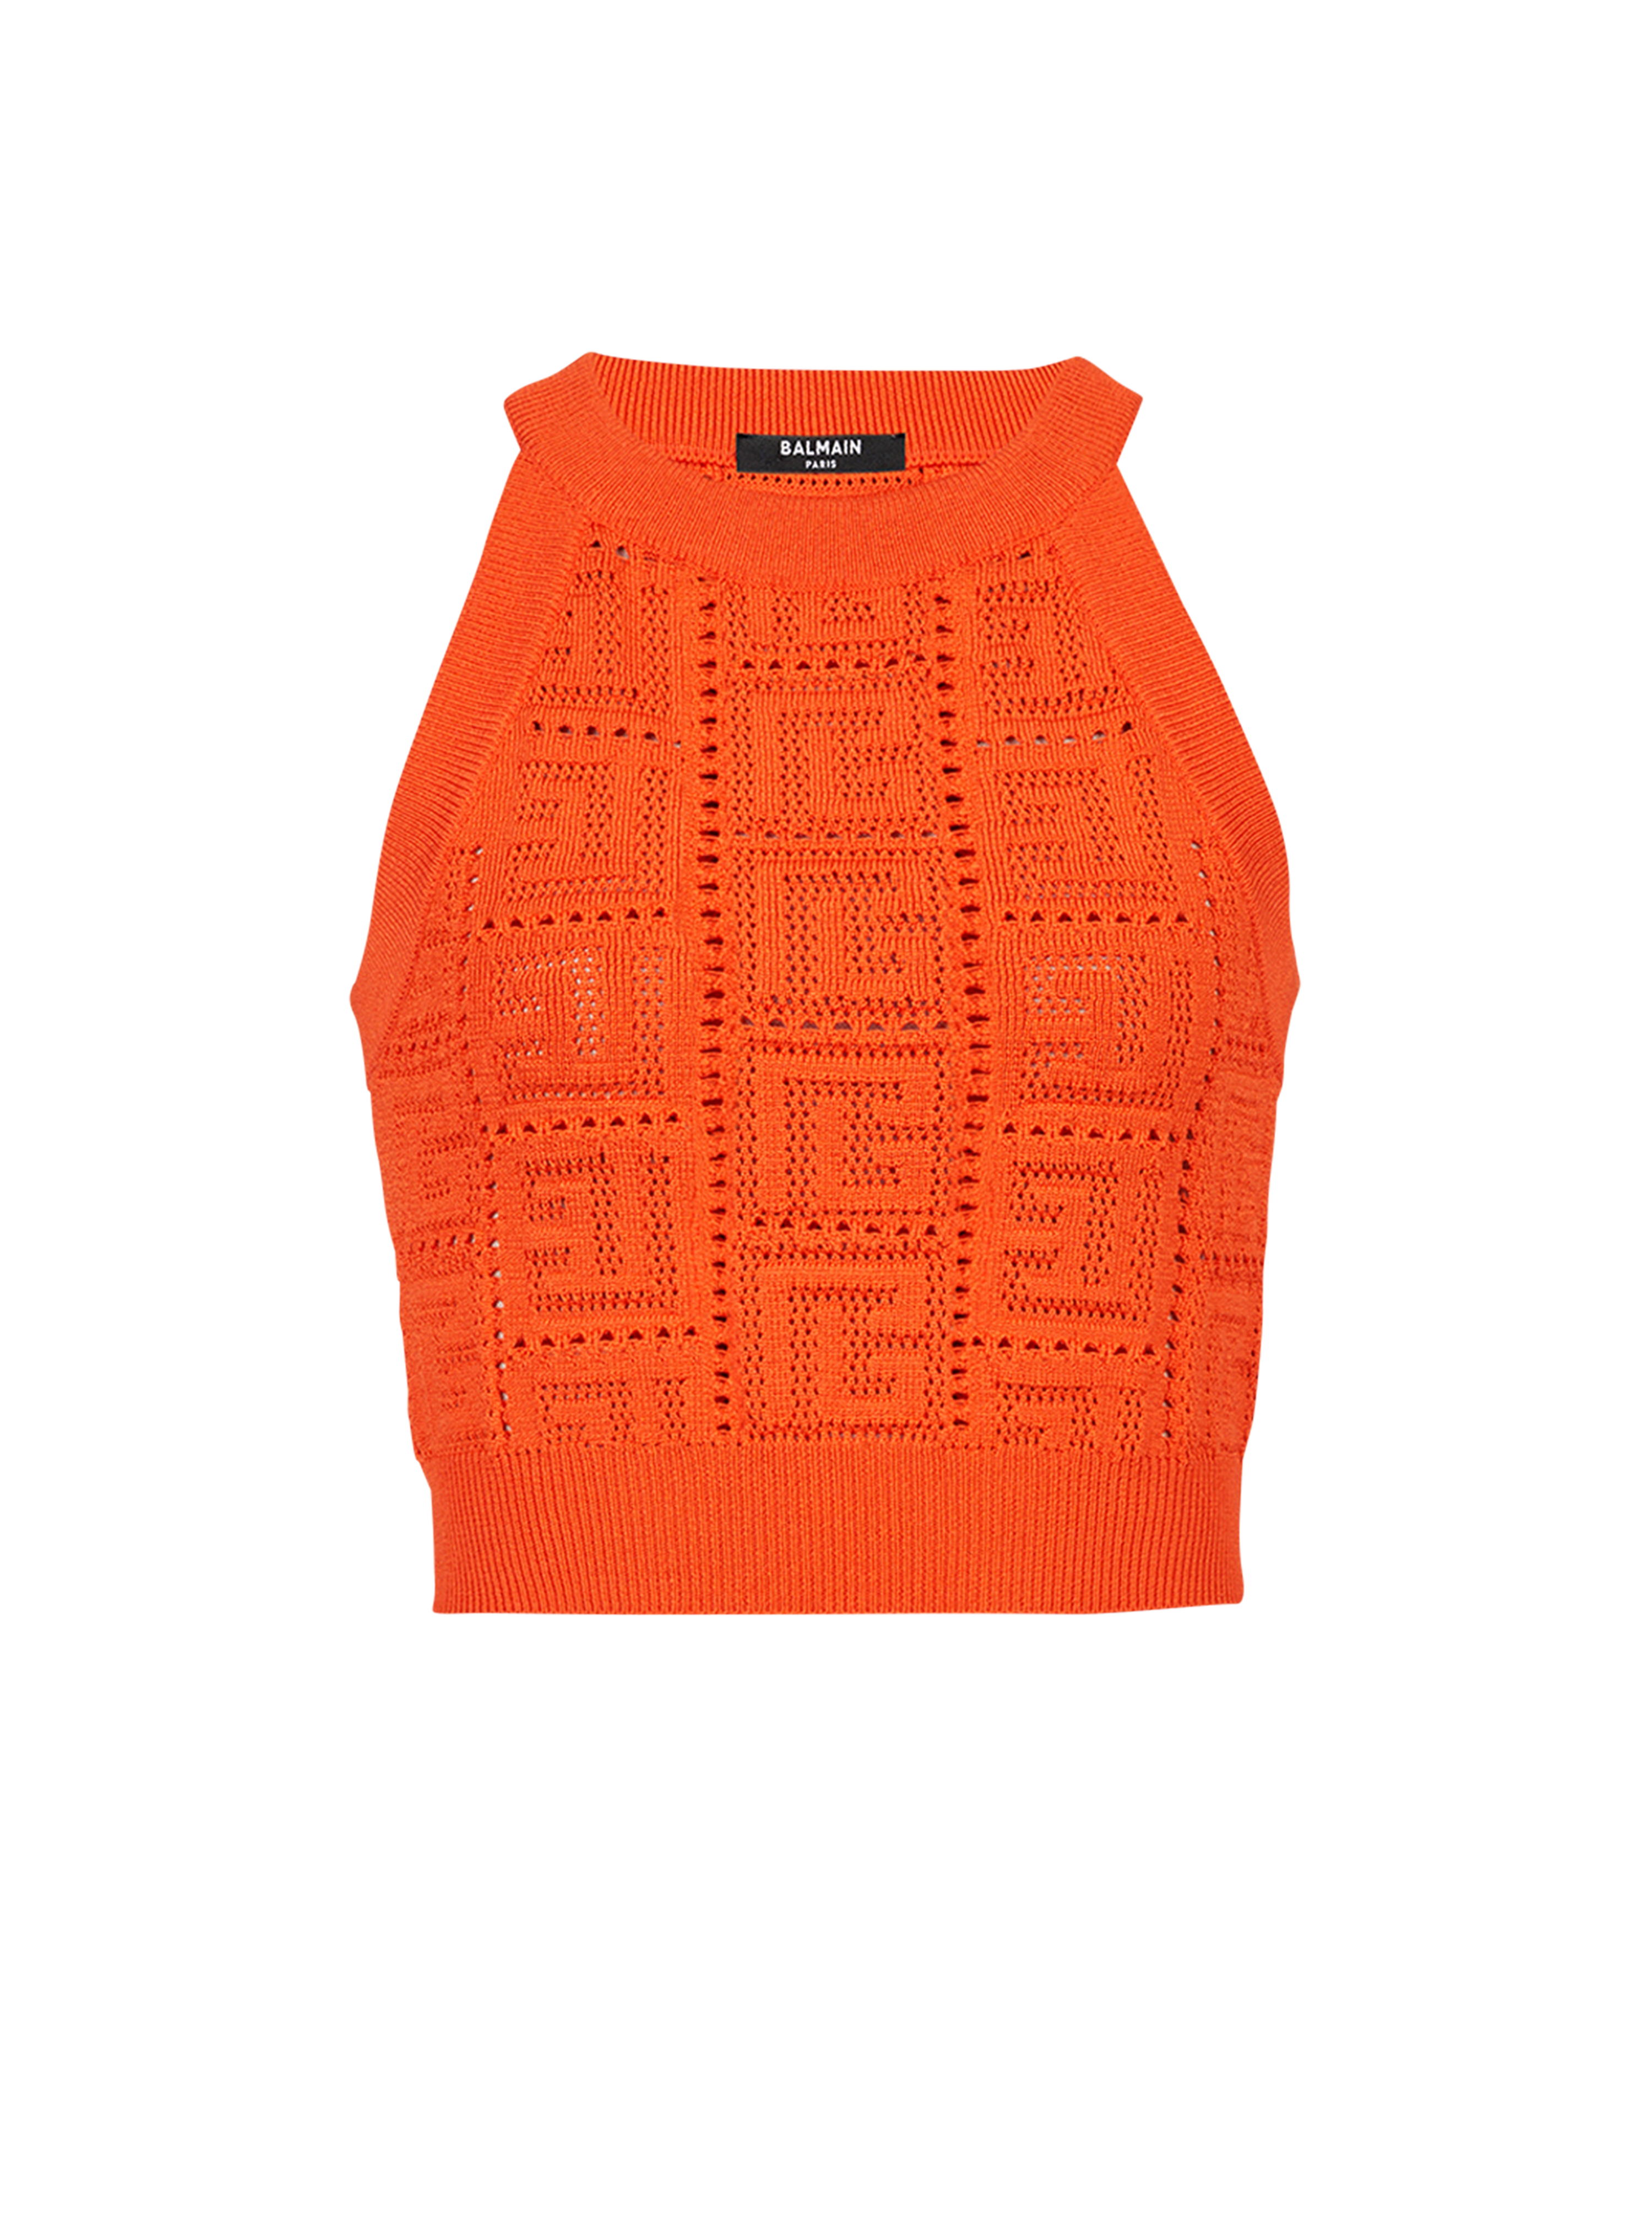 Eco-designed knit crop top with Balmain monogram, orange